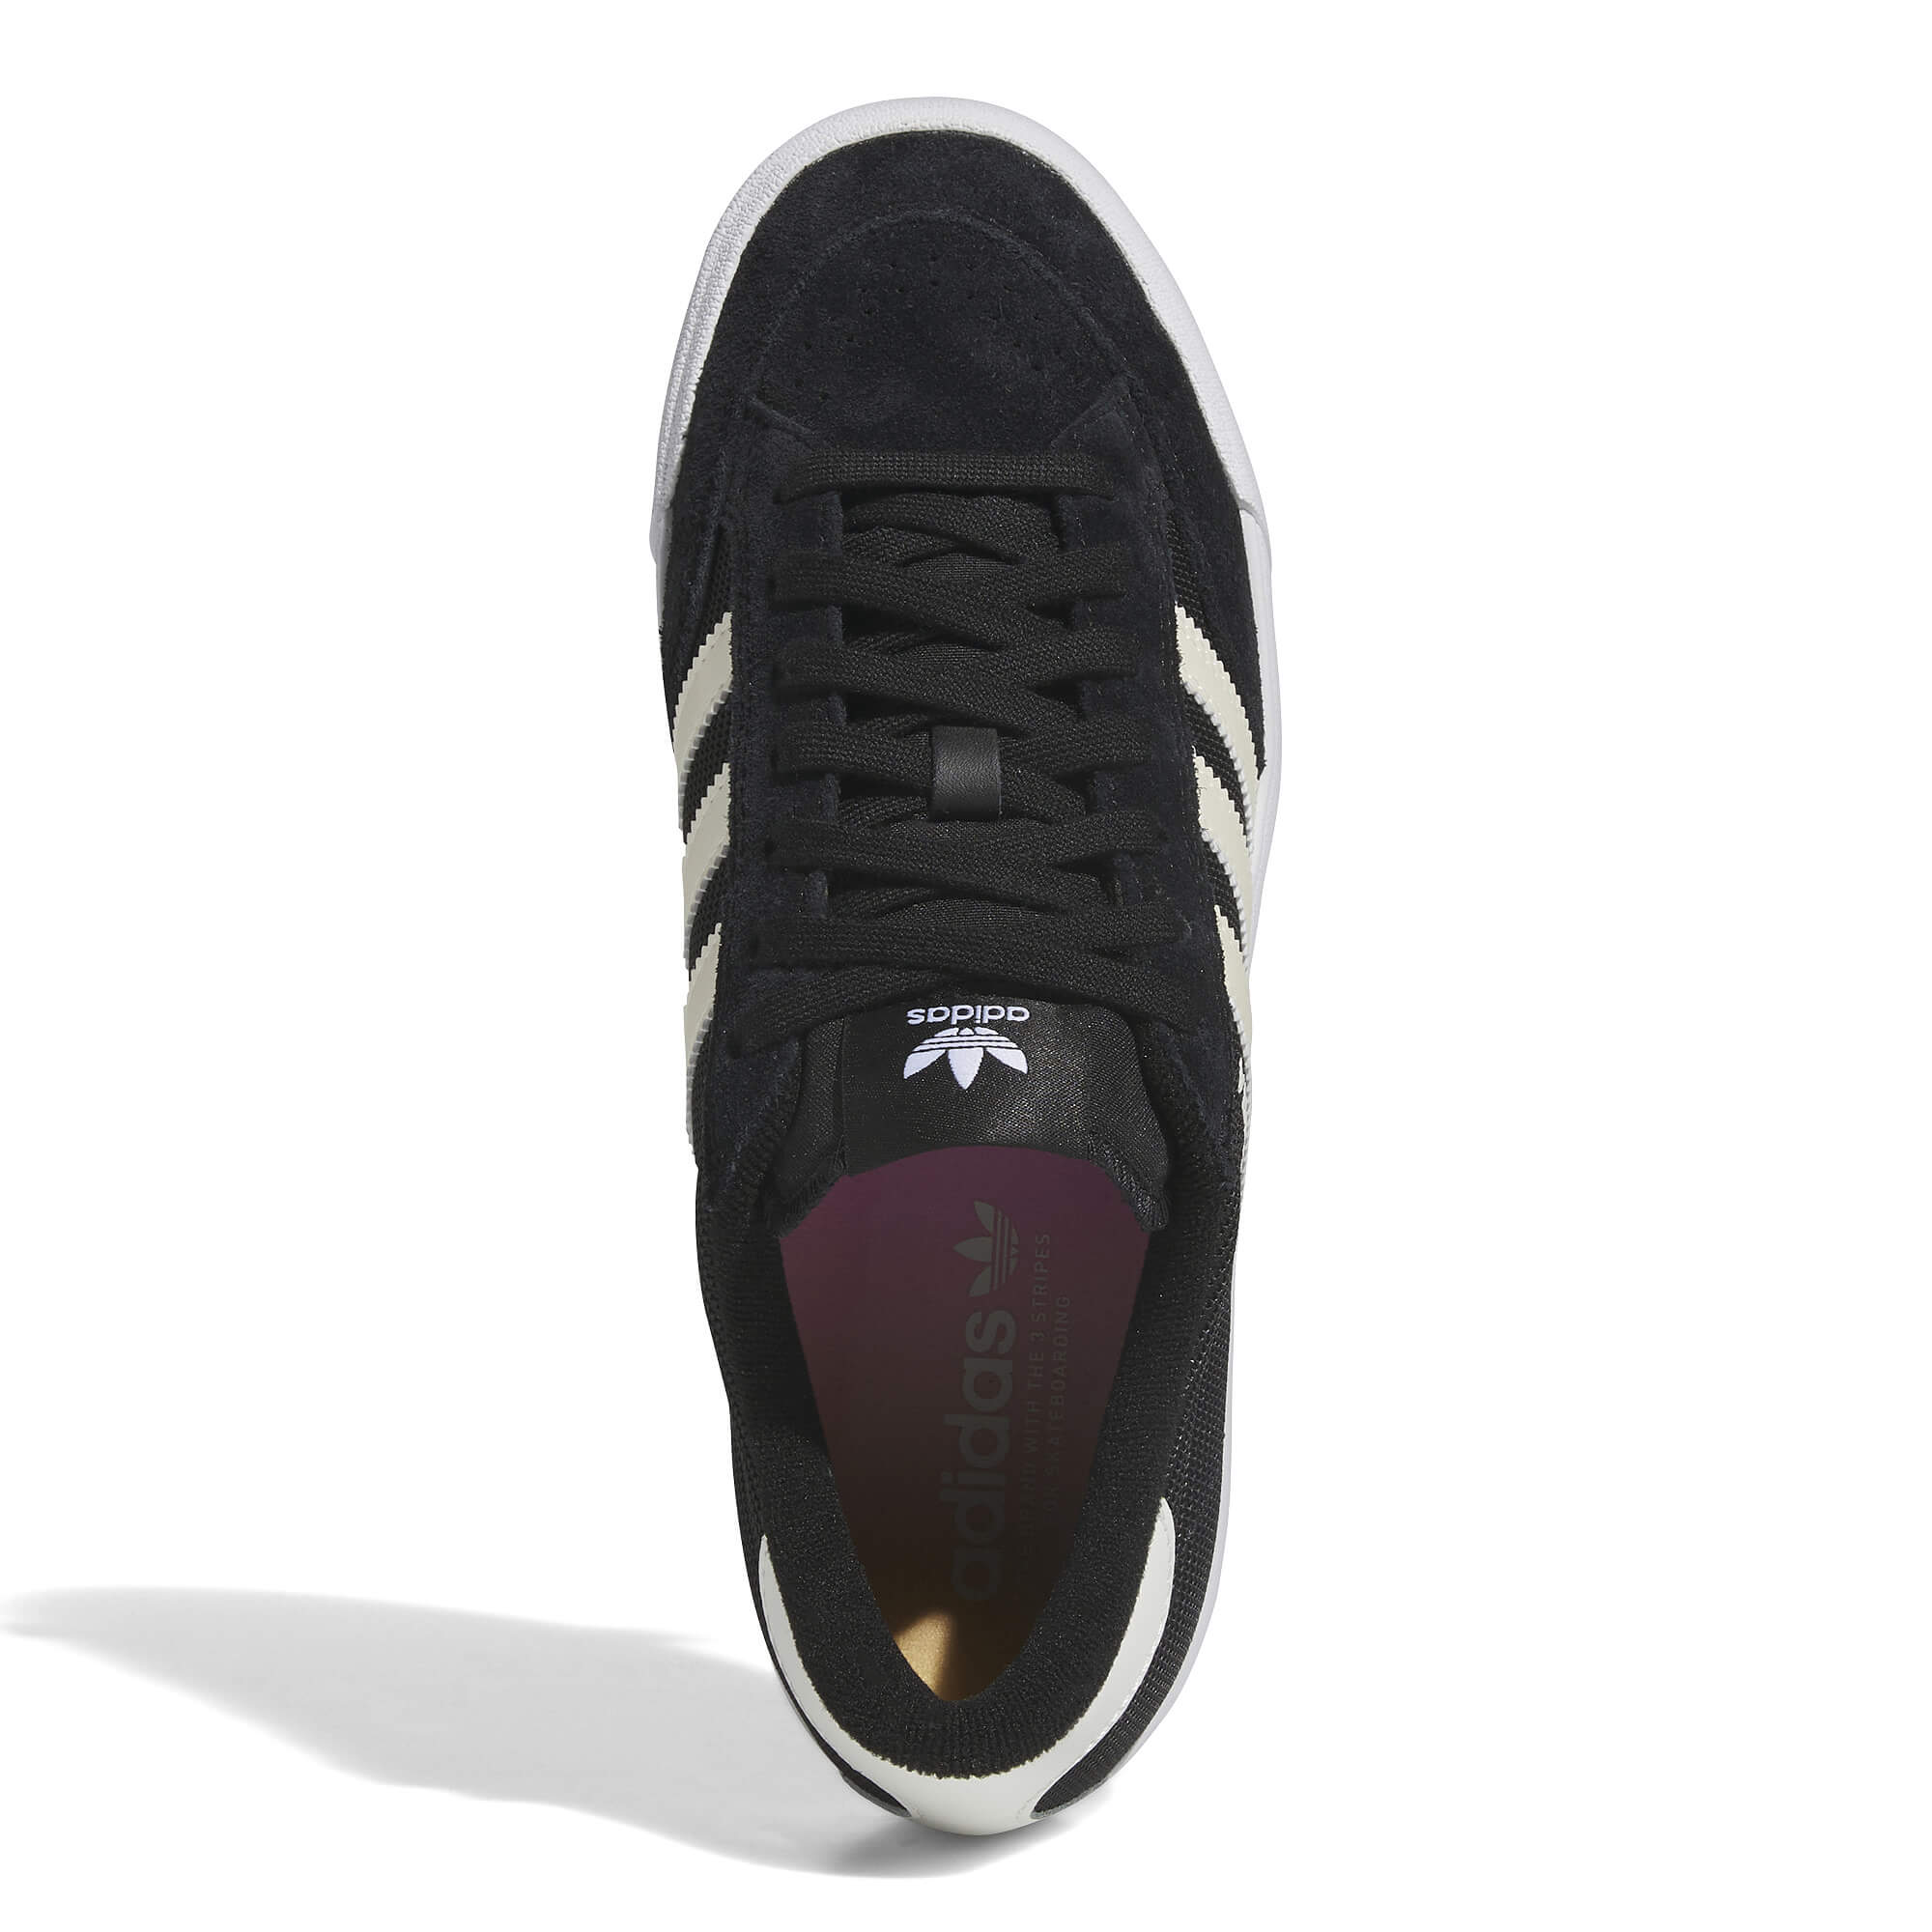 Adidas Nora Skateboarding Shoes Black Zero Metalic Spark